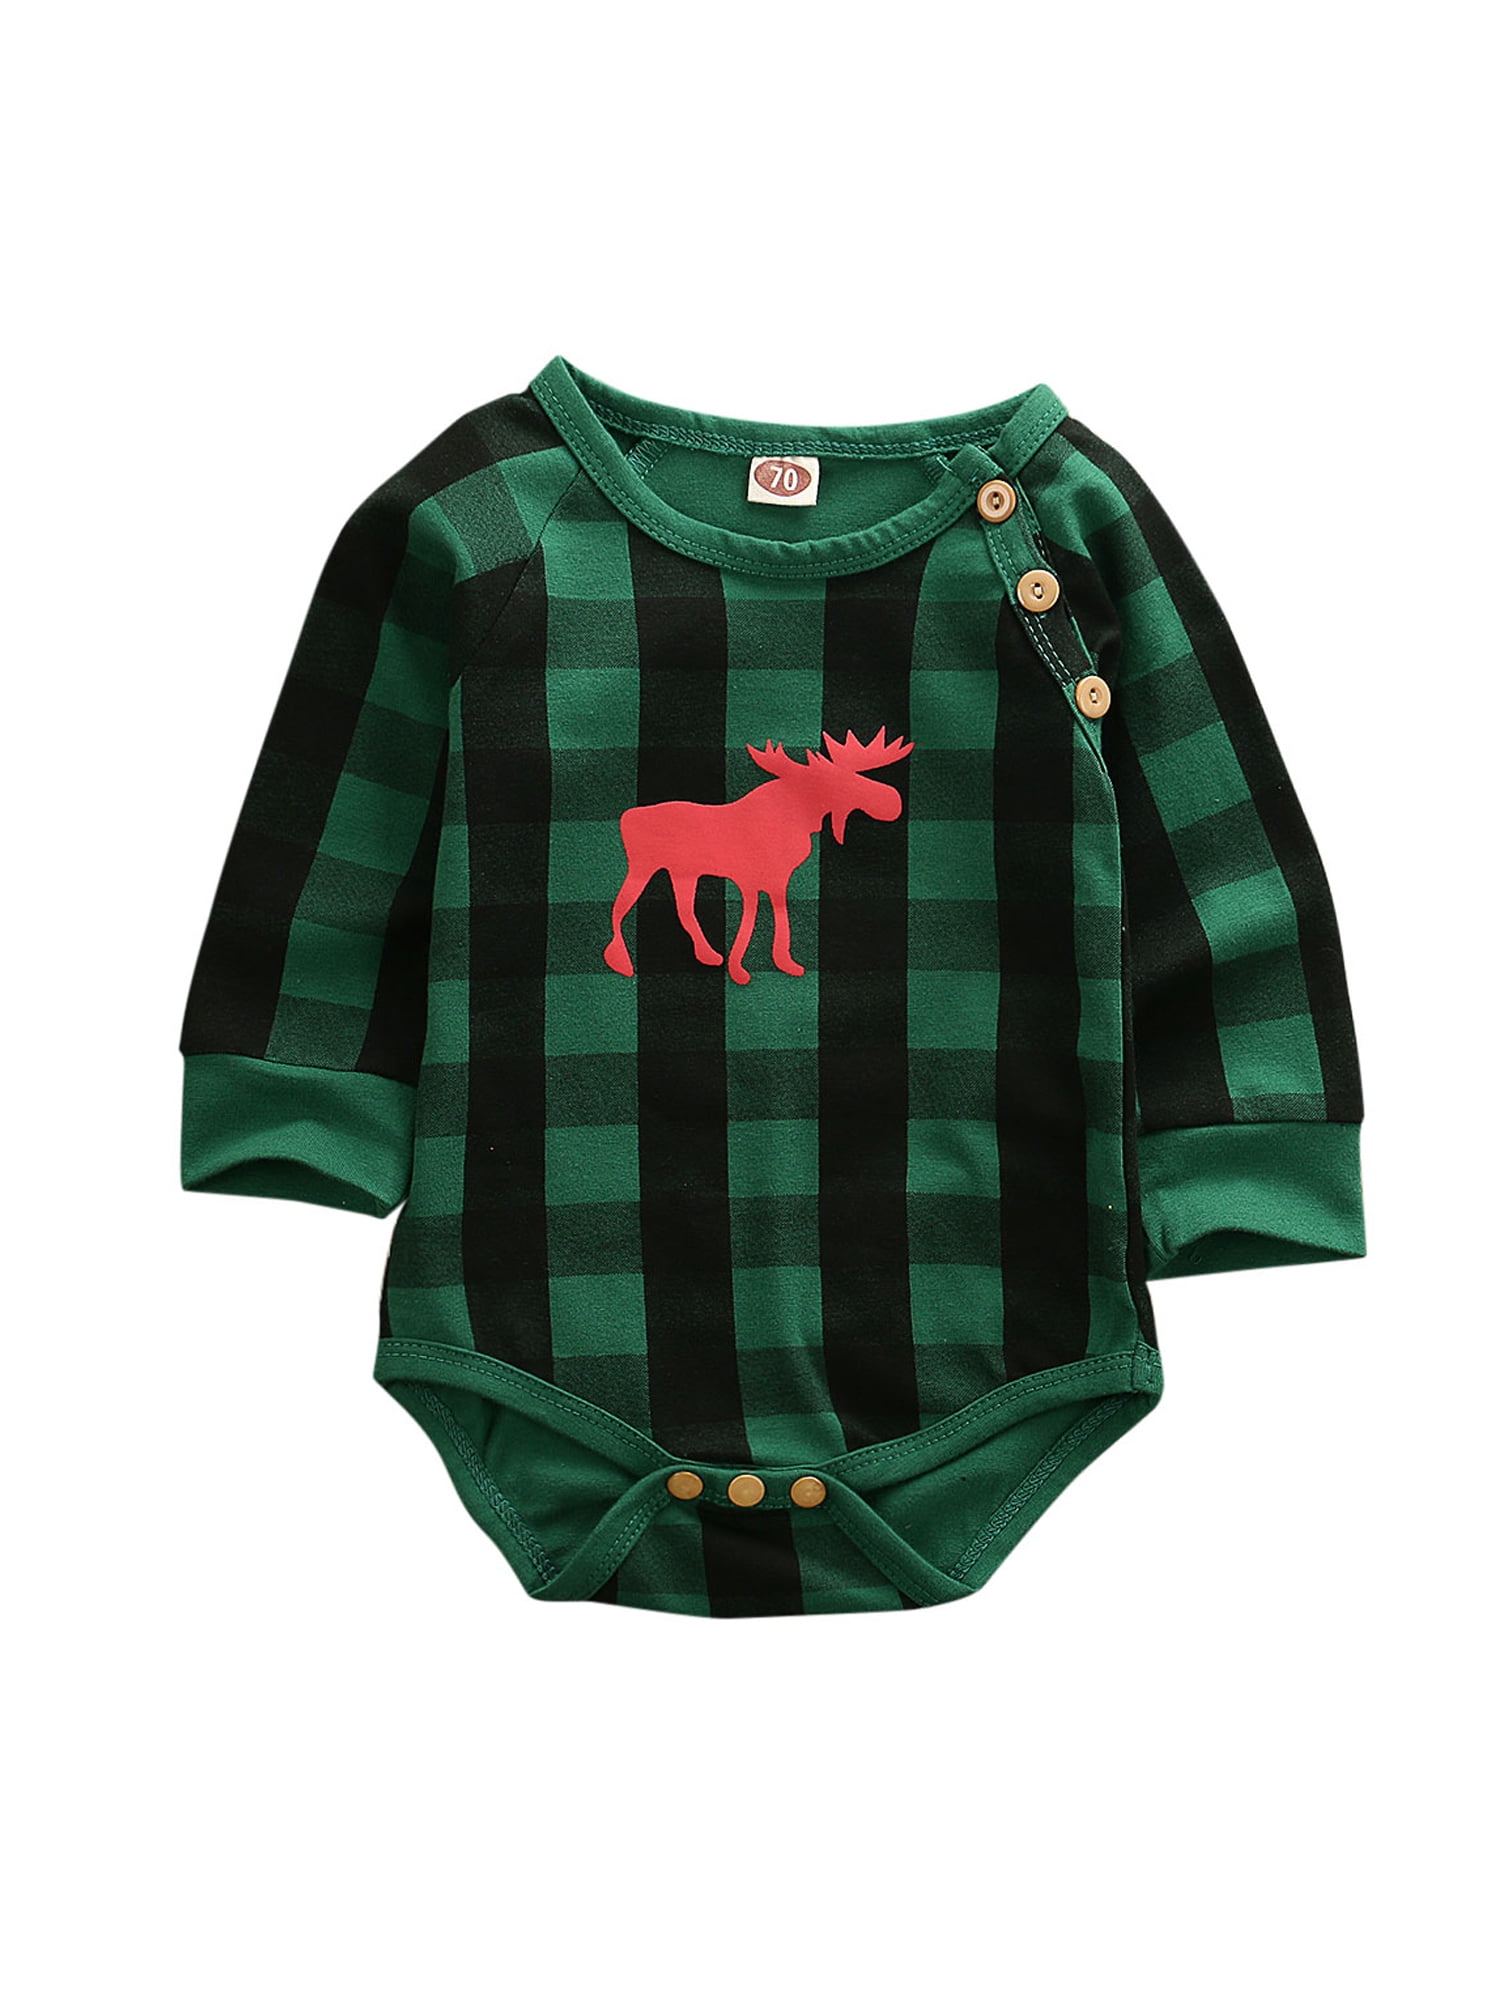 Long Sleeve Cotton Bodysuit for Baby Girls Boys Soft Plaid Christmas Reindeer Crawler